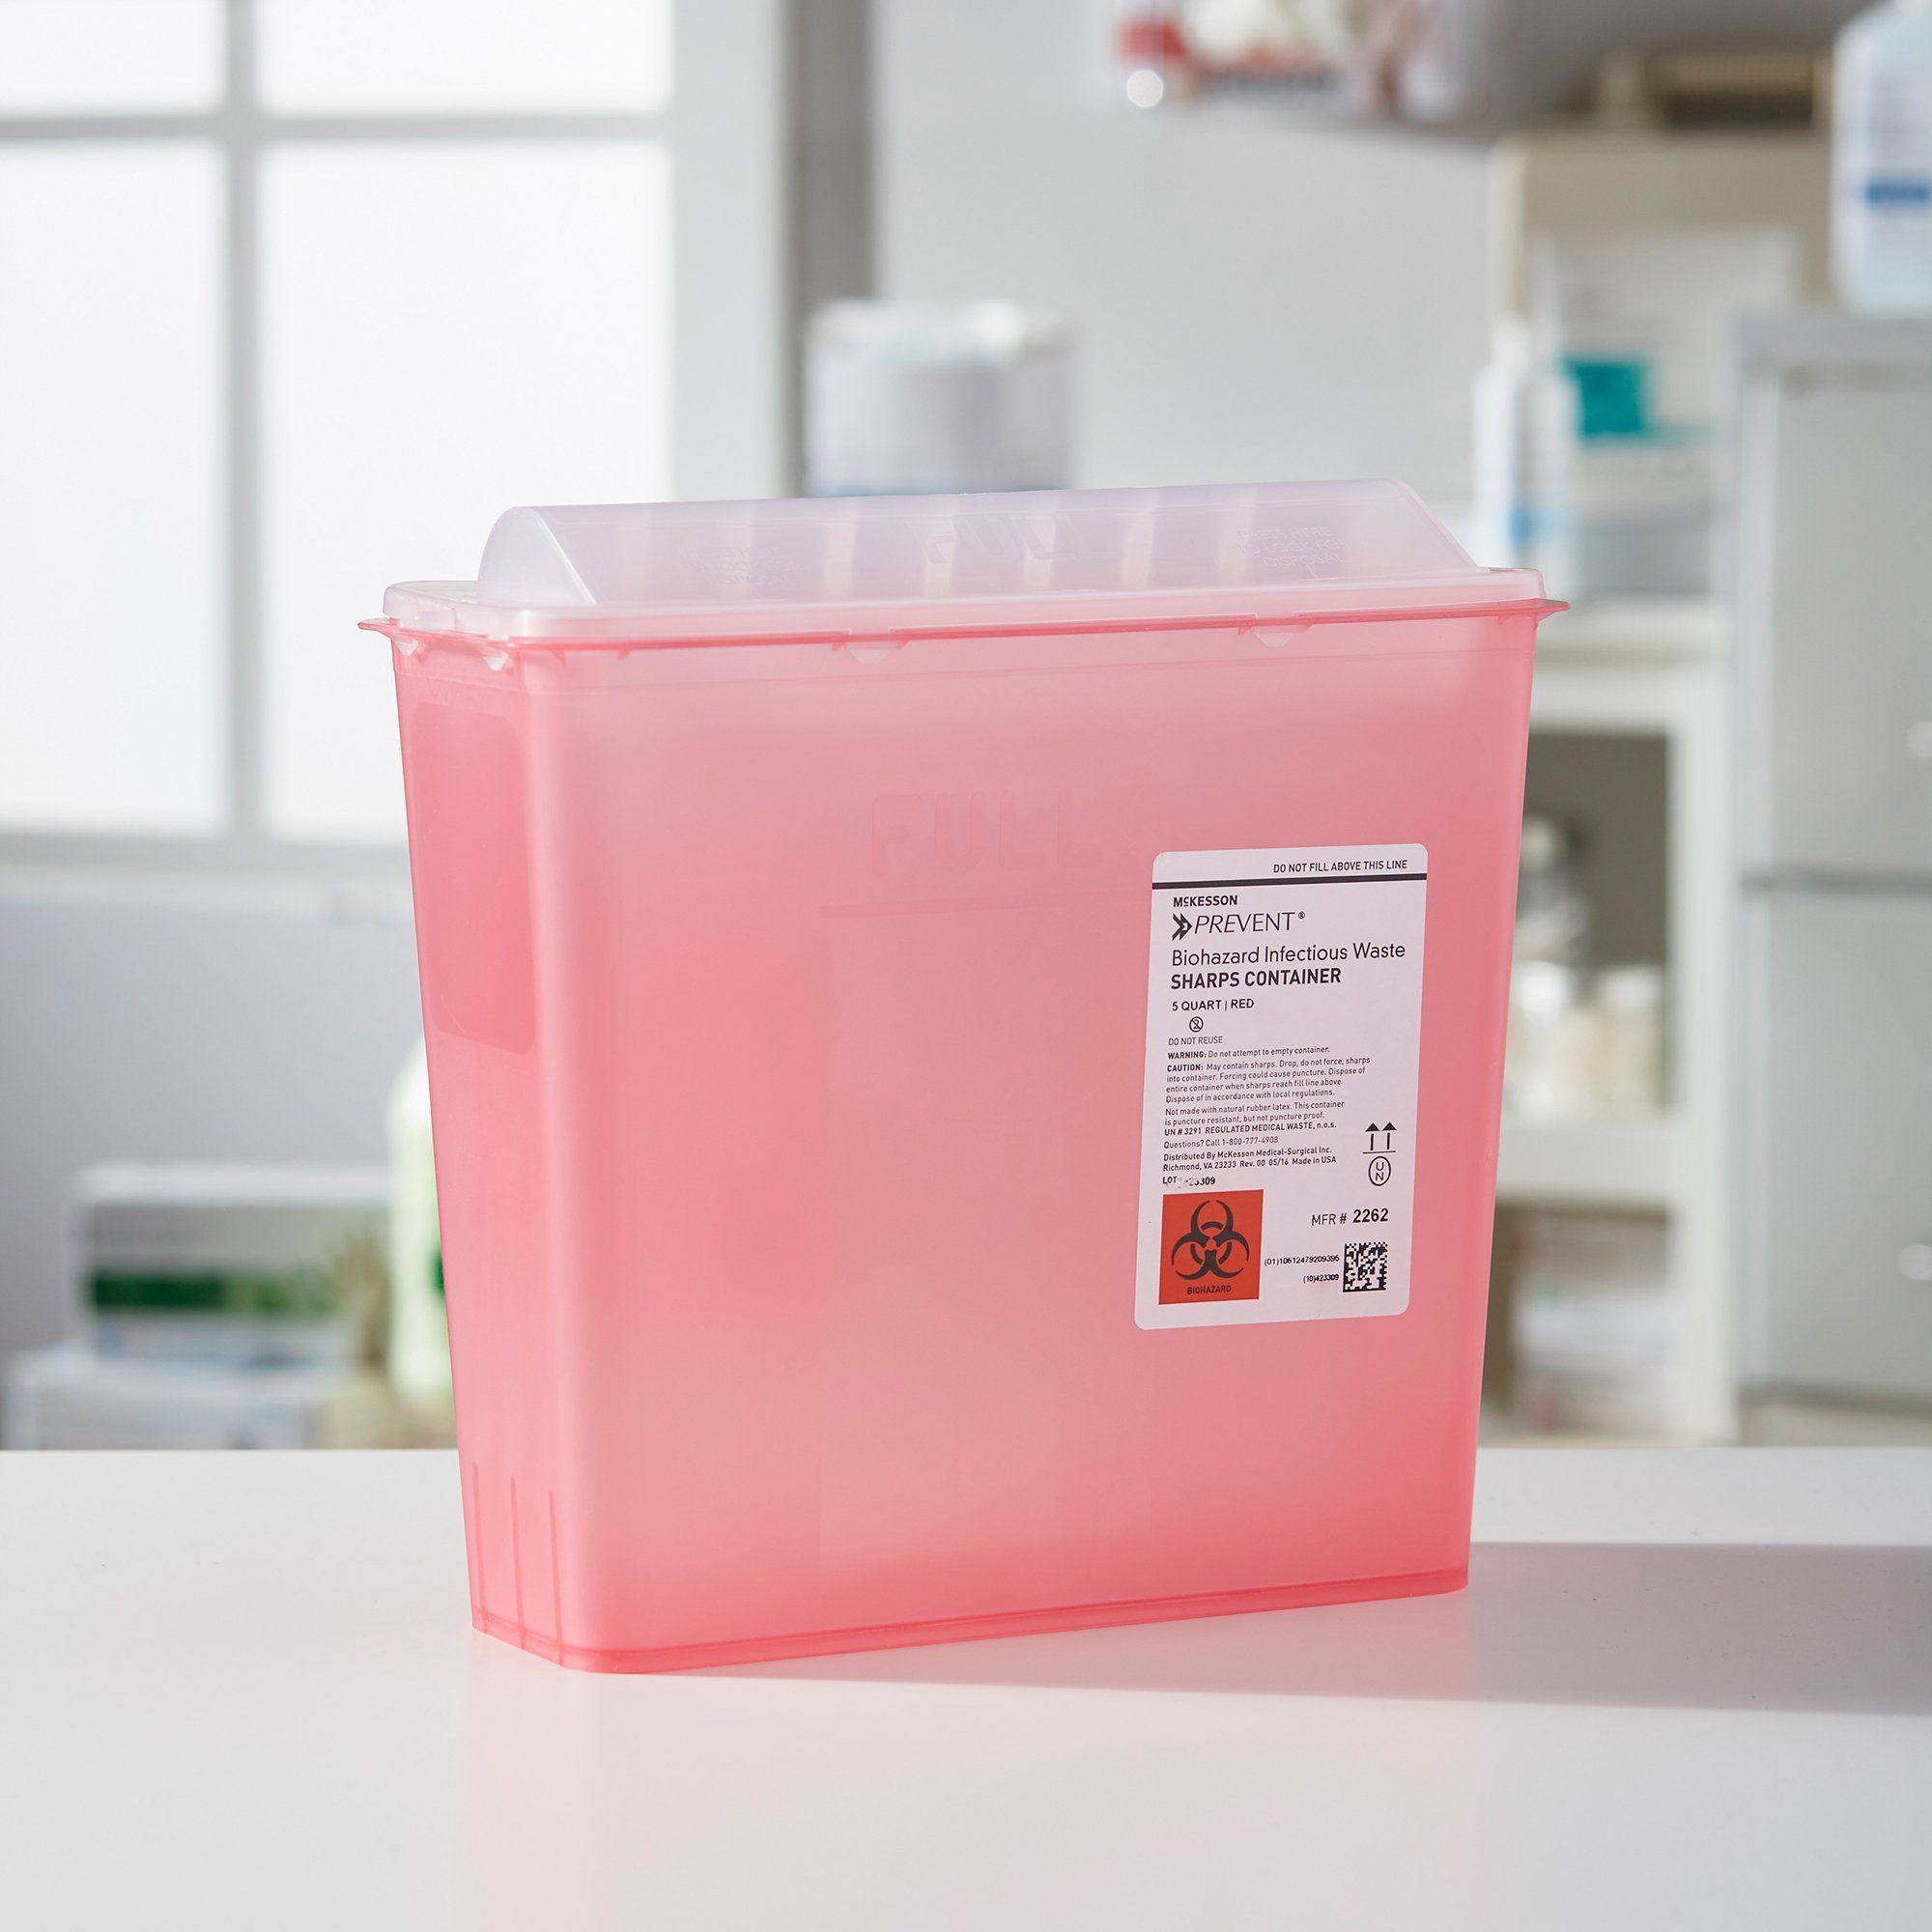 McKesson Prevent® Biohazard Infectious Waste Translucent Sharps Container - 5 Quart